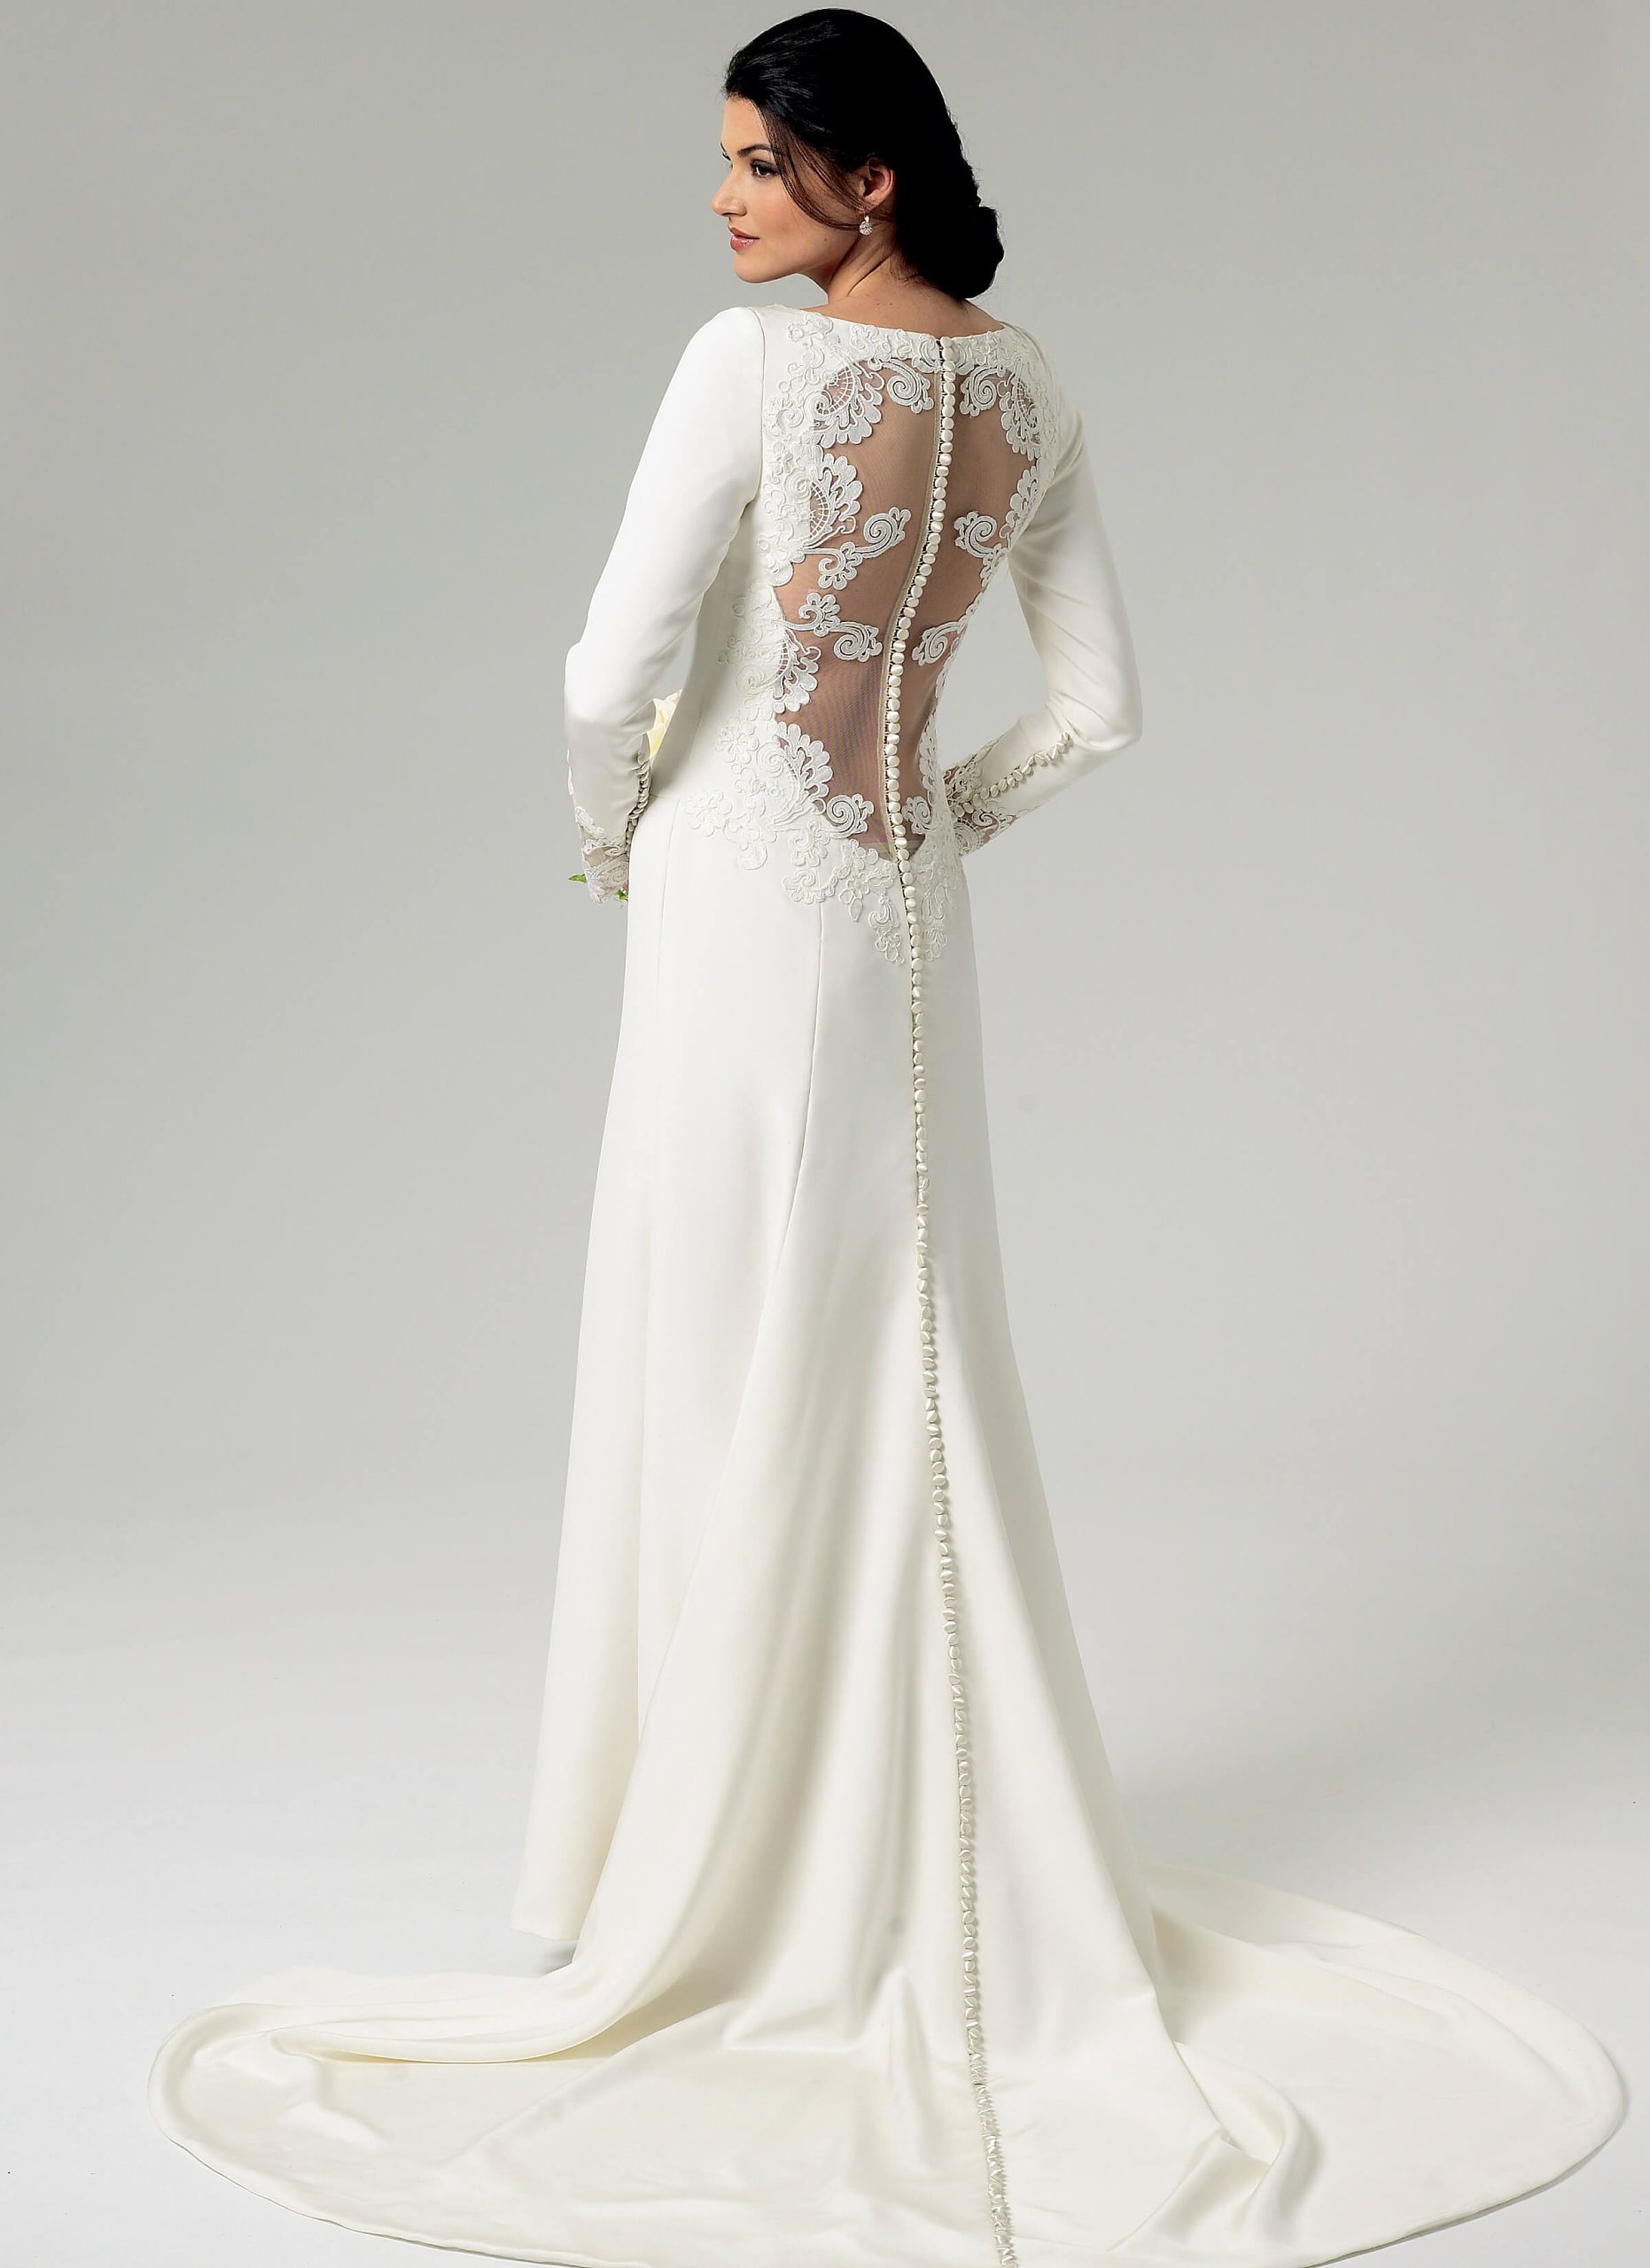 Butterick Sewing Pattern B5779 Misses' Bridal Dress